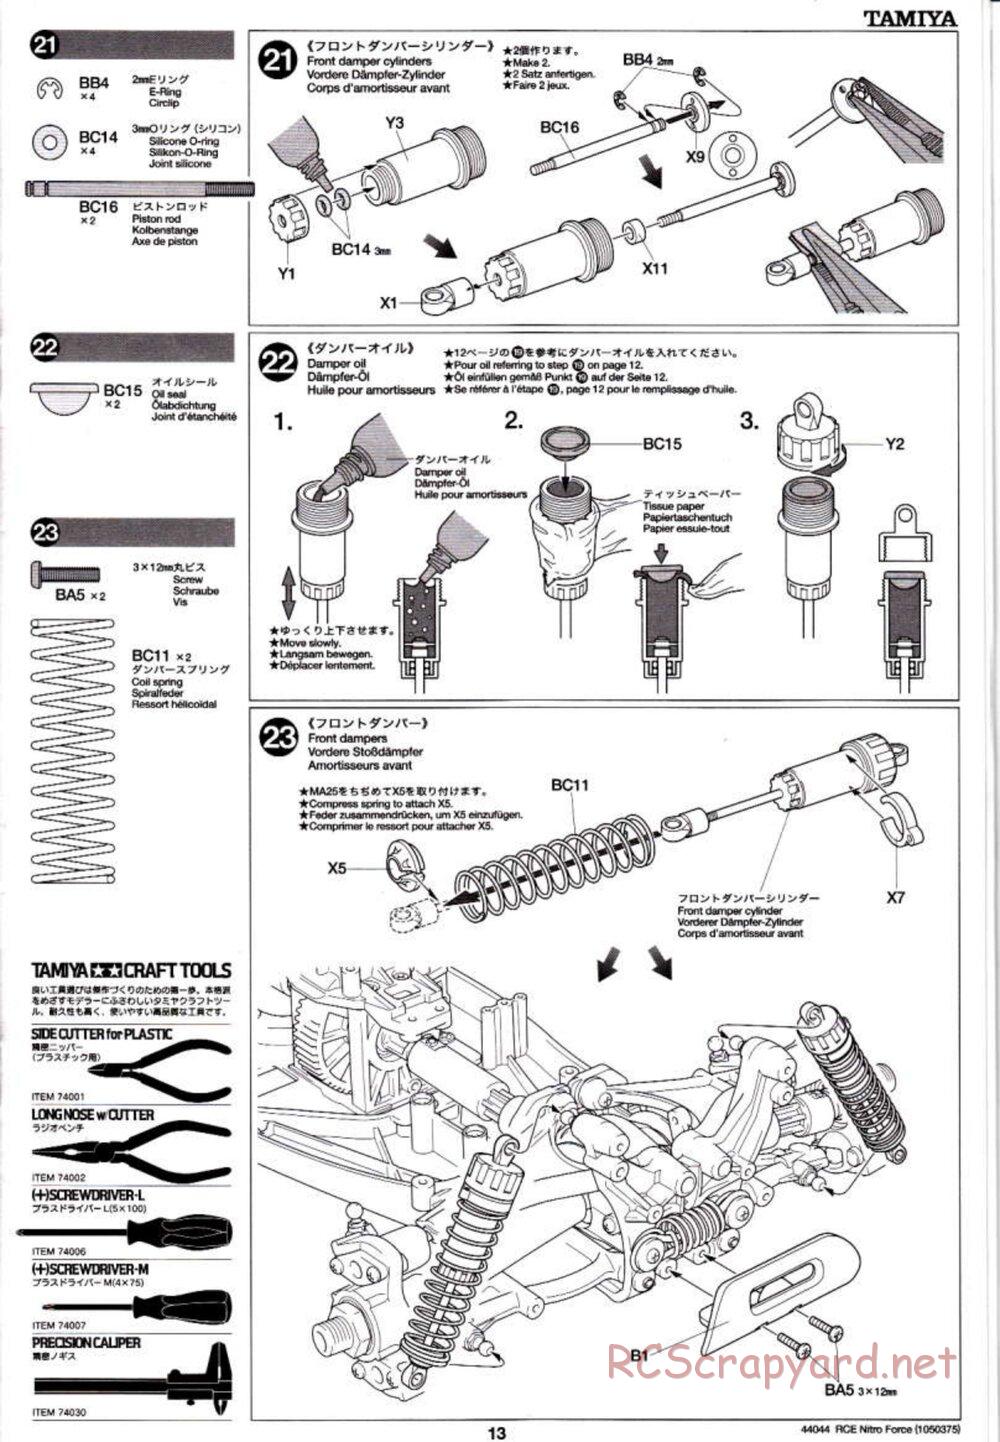 Tamiya - Nitro Force - NDF-01 Chassis - Manual - Page 13